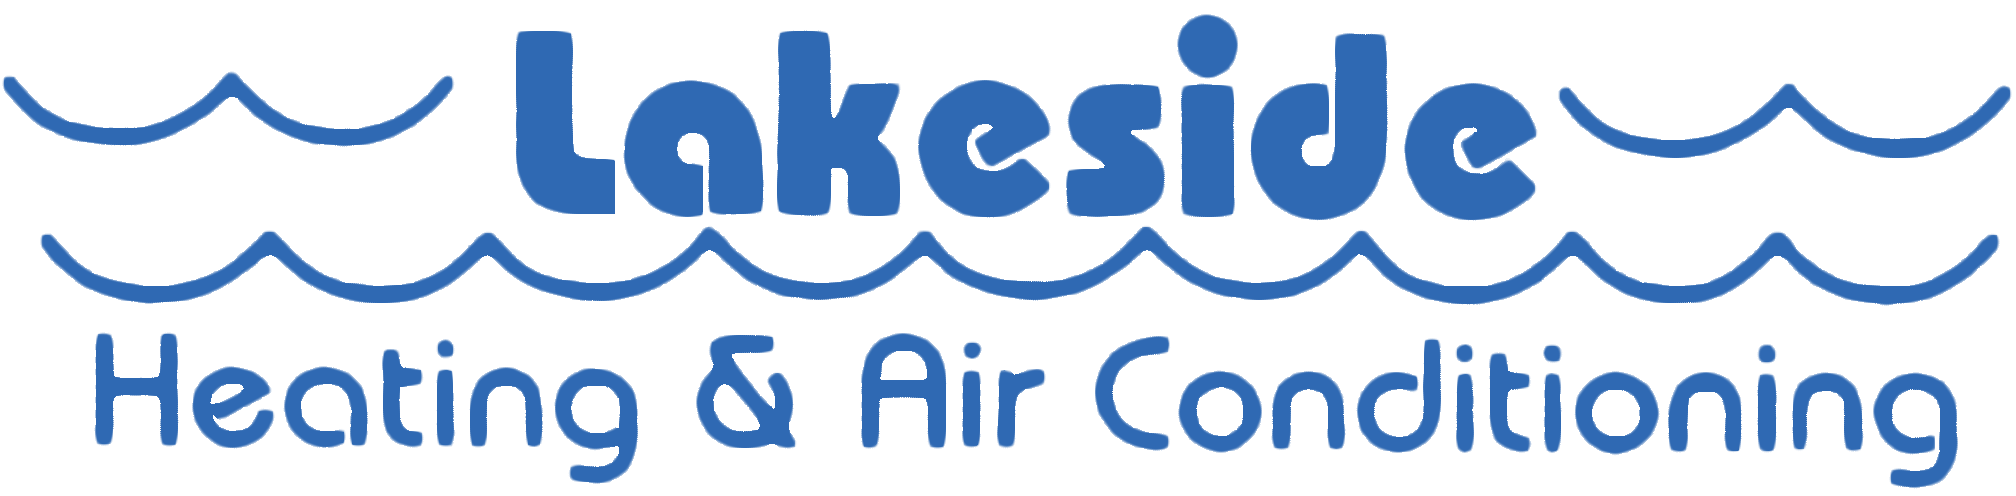 Lakeside Heating & Air Conditioning coupon logo